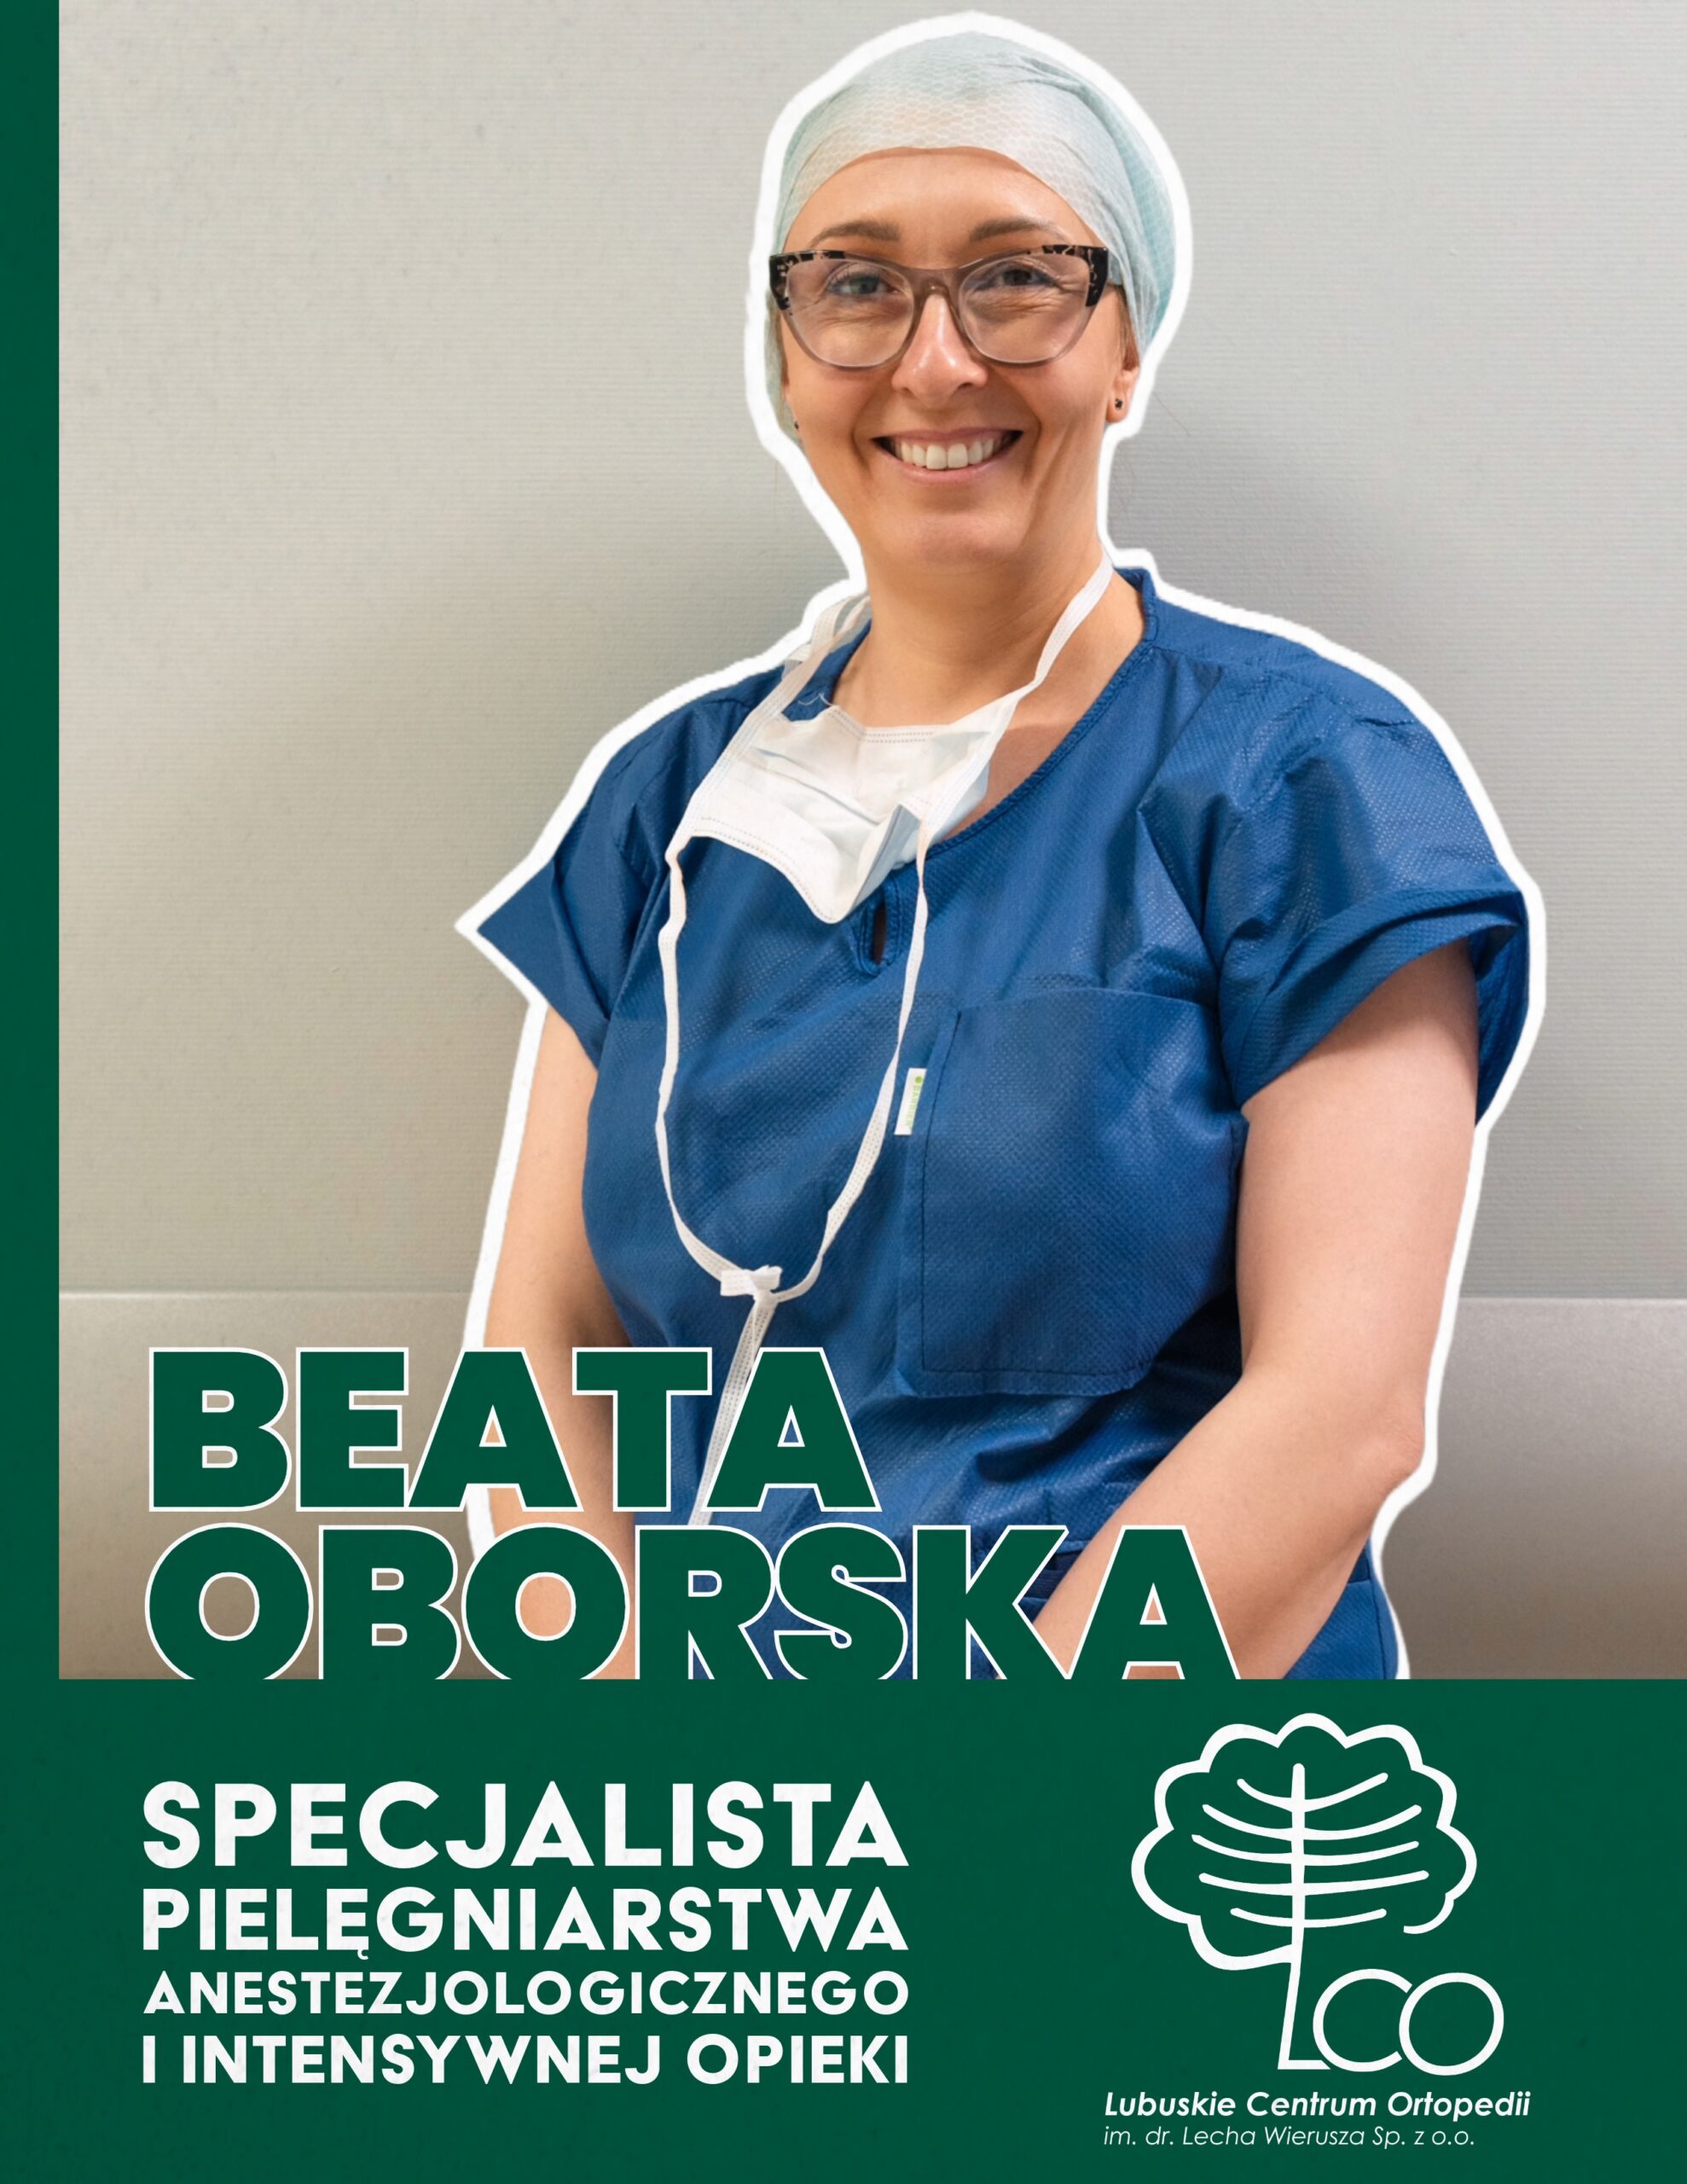 You are currently viewing Poznaj zespół LCO – Beata Oborska